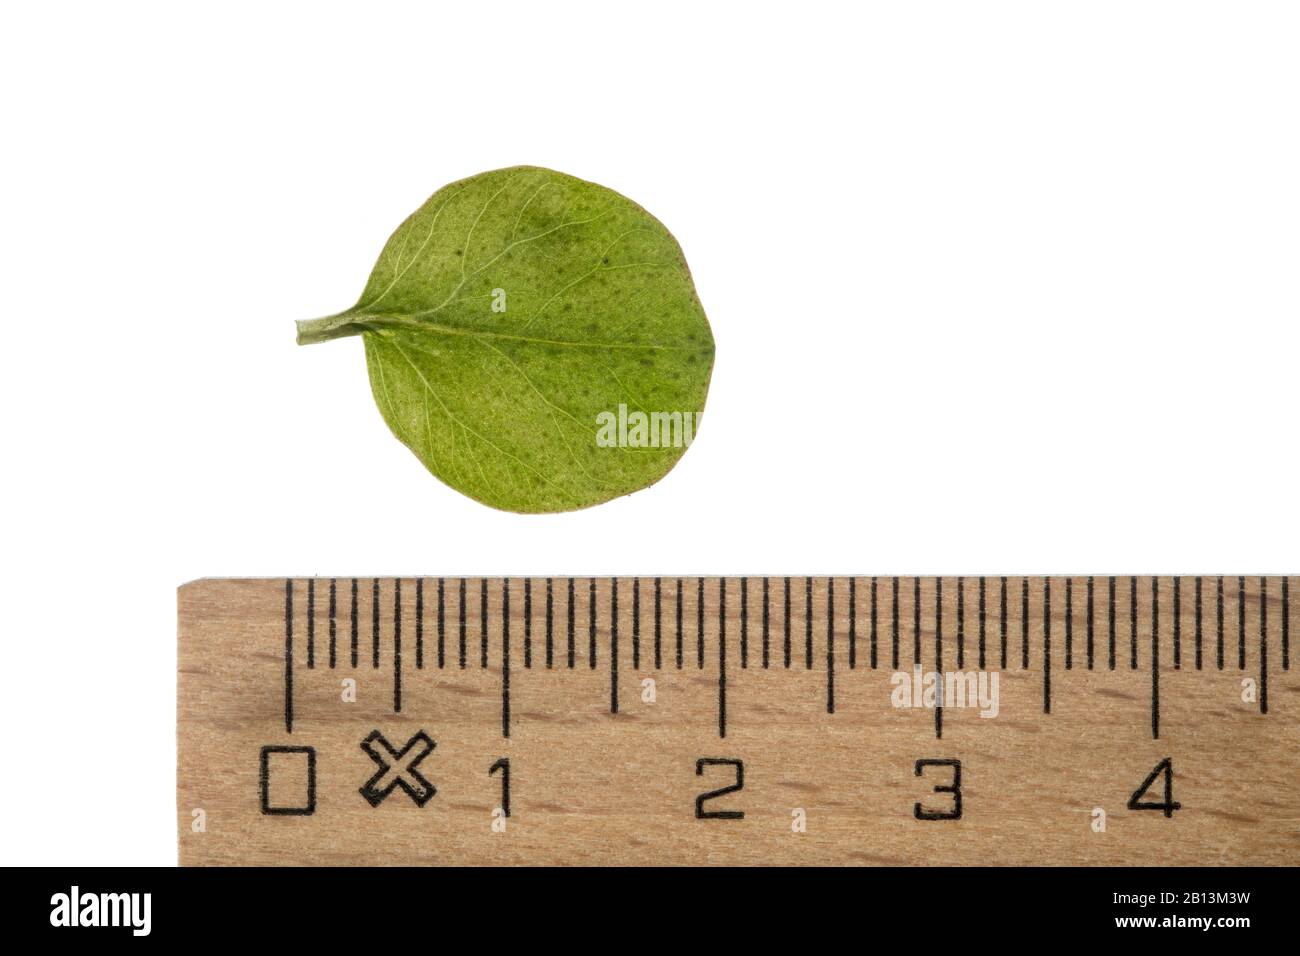 creeping jenny, moneywort (Lysimachia nummularia), leaf, cutout with ruler, Germany Stock Photo